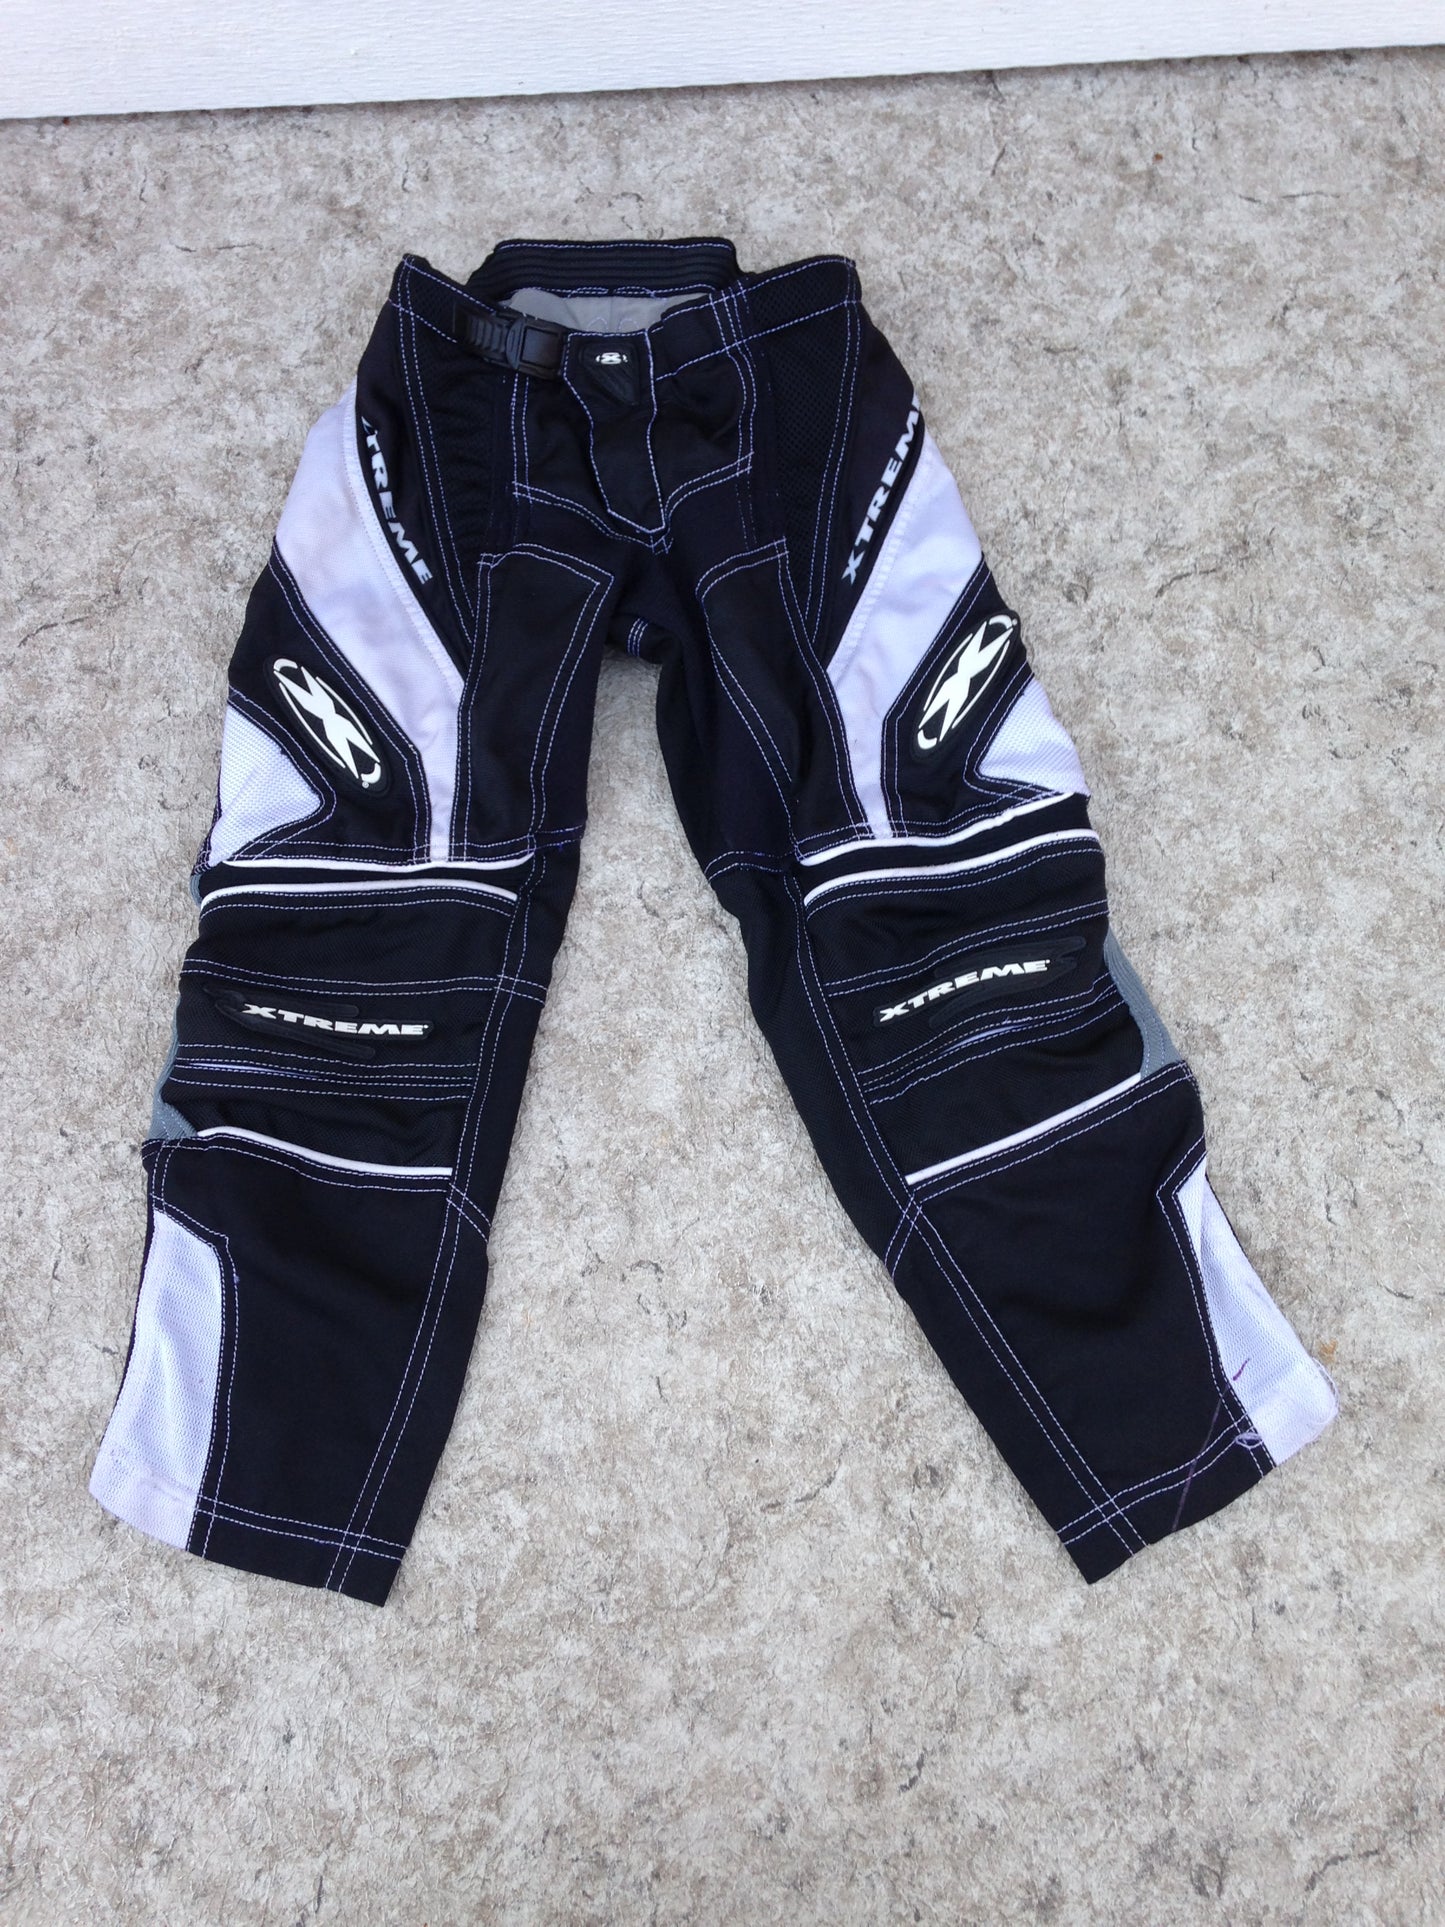 Motocross BMX Dirt Bike Pants  Child Size 26 inch Size 12 Xtreme Black White